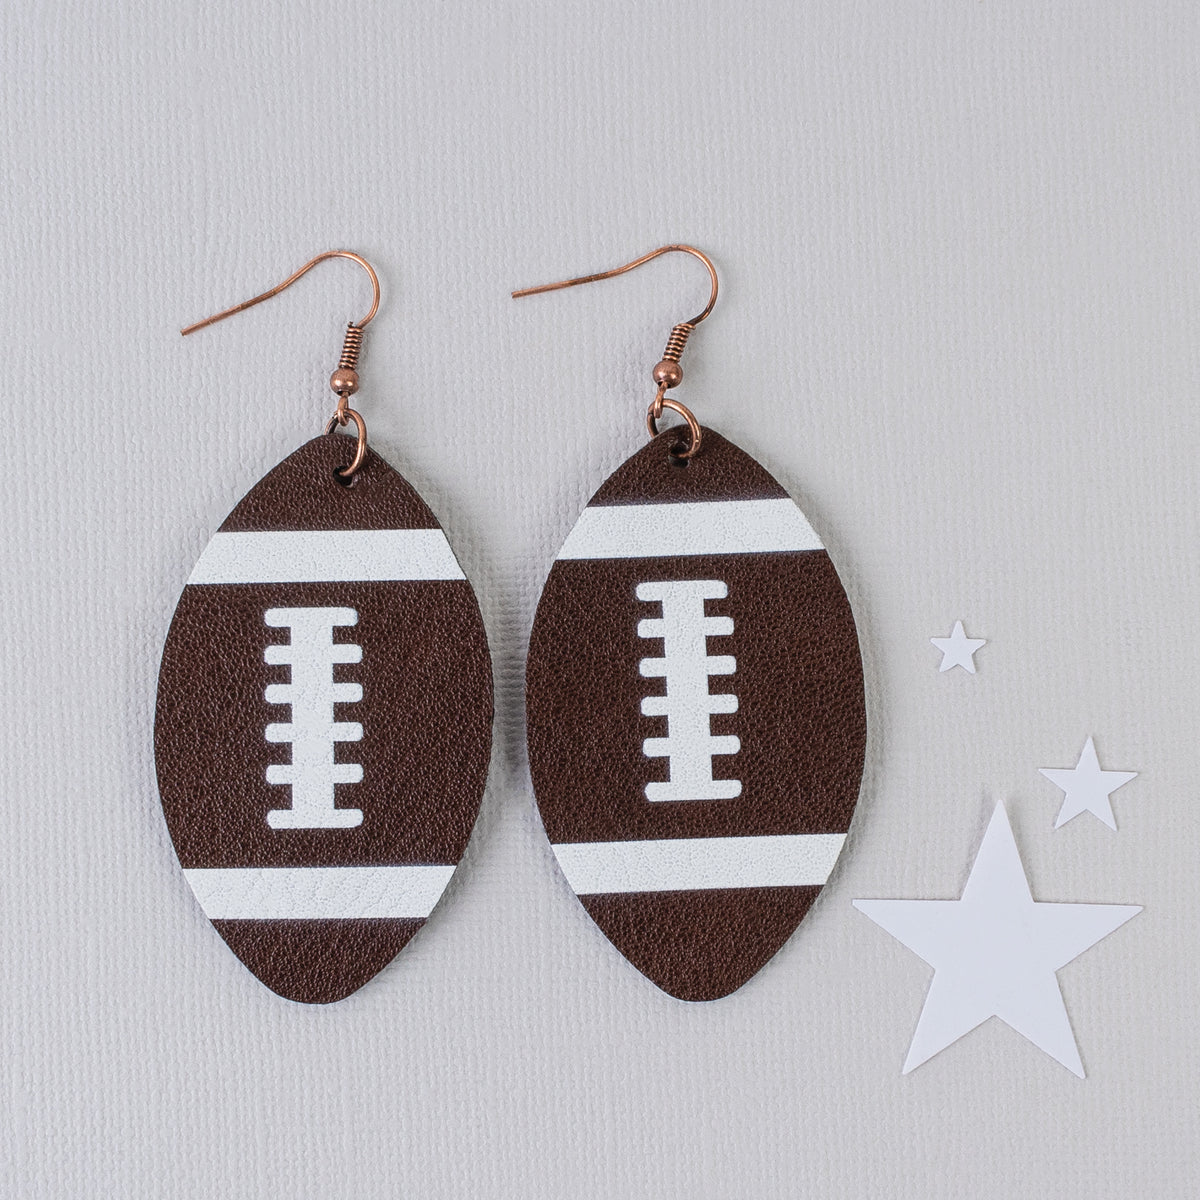 73482 - Football Earrings - Brown - Fashion Jewelry Wholesale